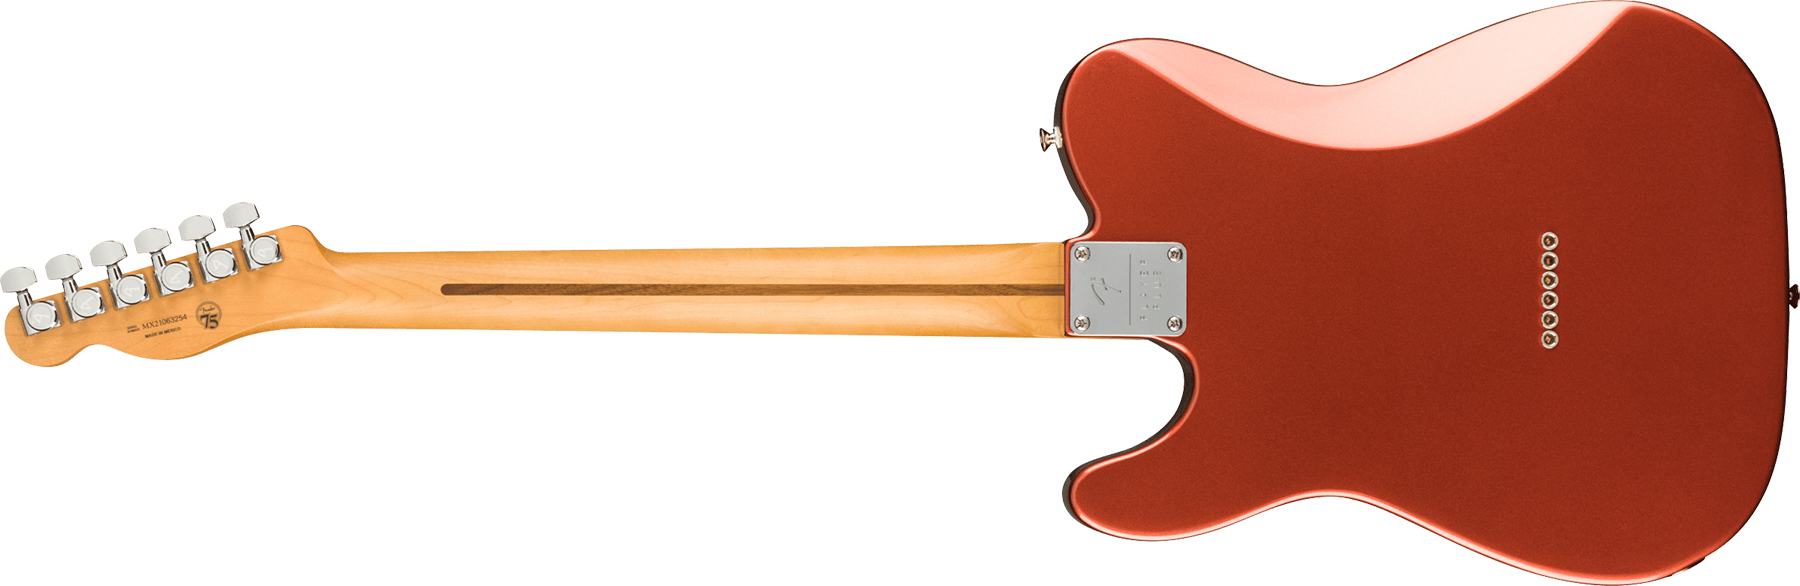 Fender Tele Player Plus Nashville Mex 3s Ht Pf - Aged Candy Apple Red - Guitarra eléctrica con forma de tel - Variation 1